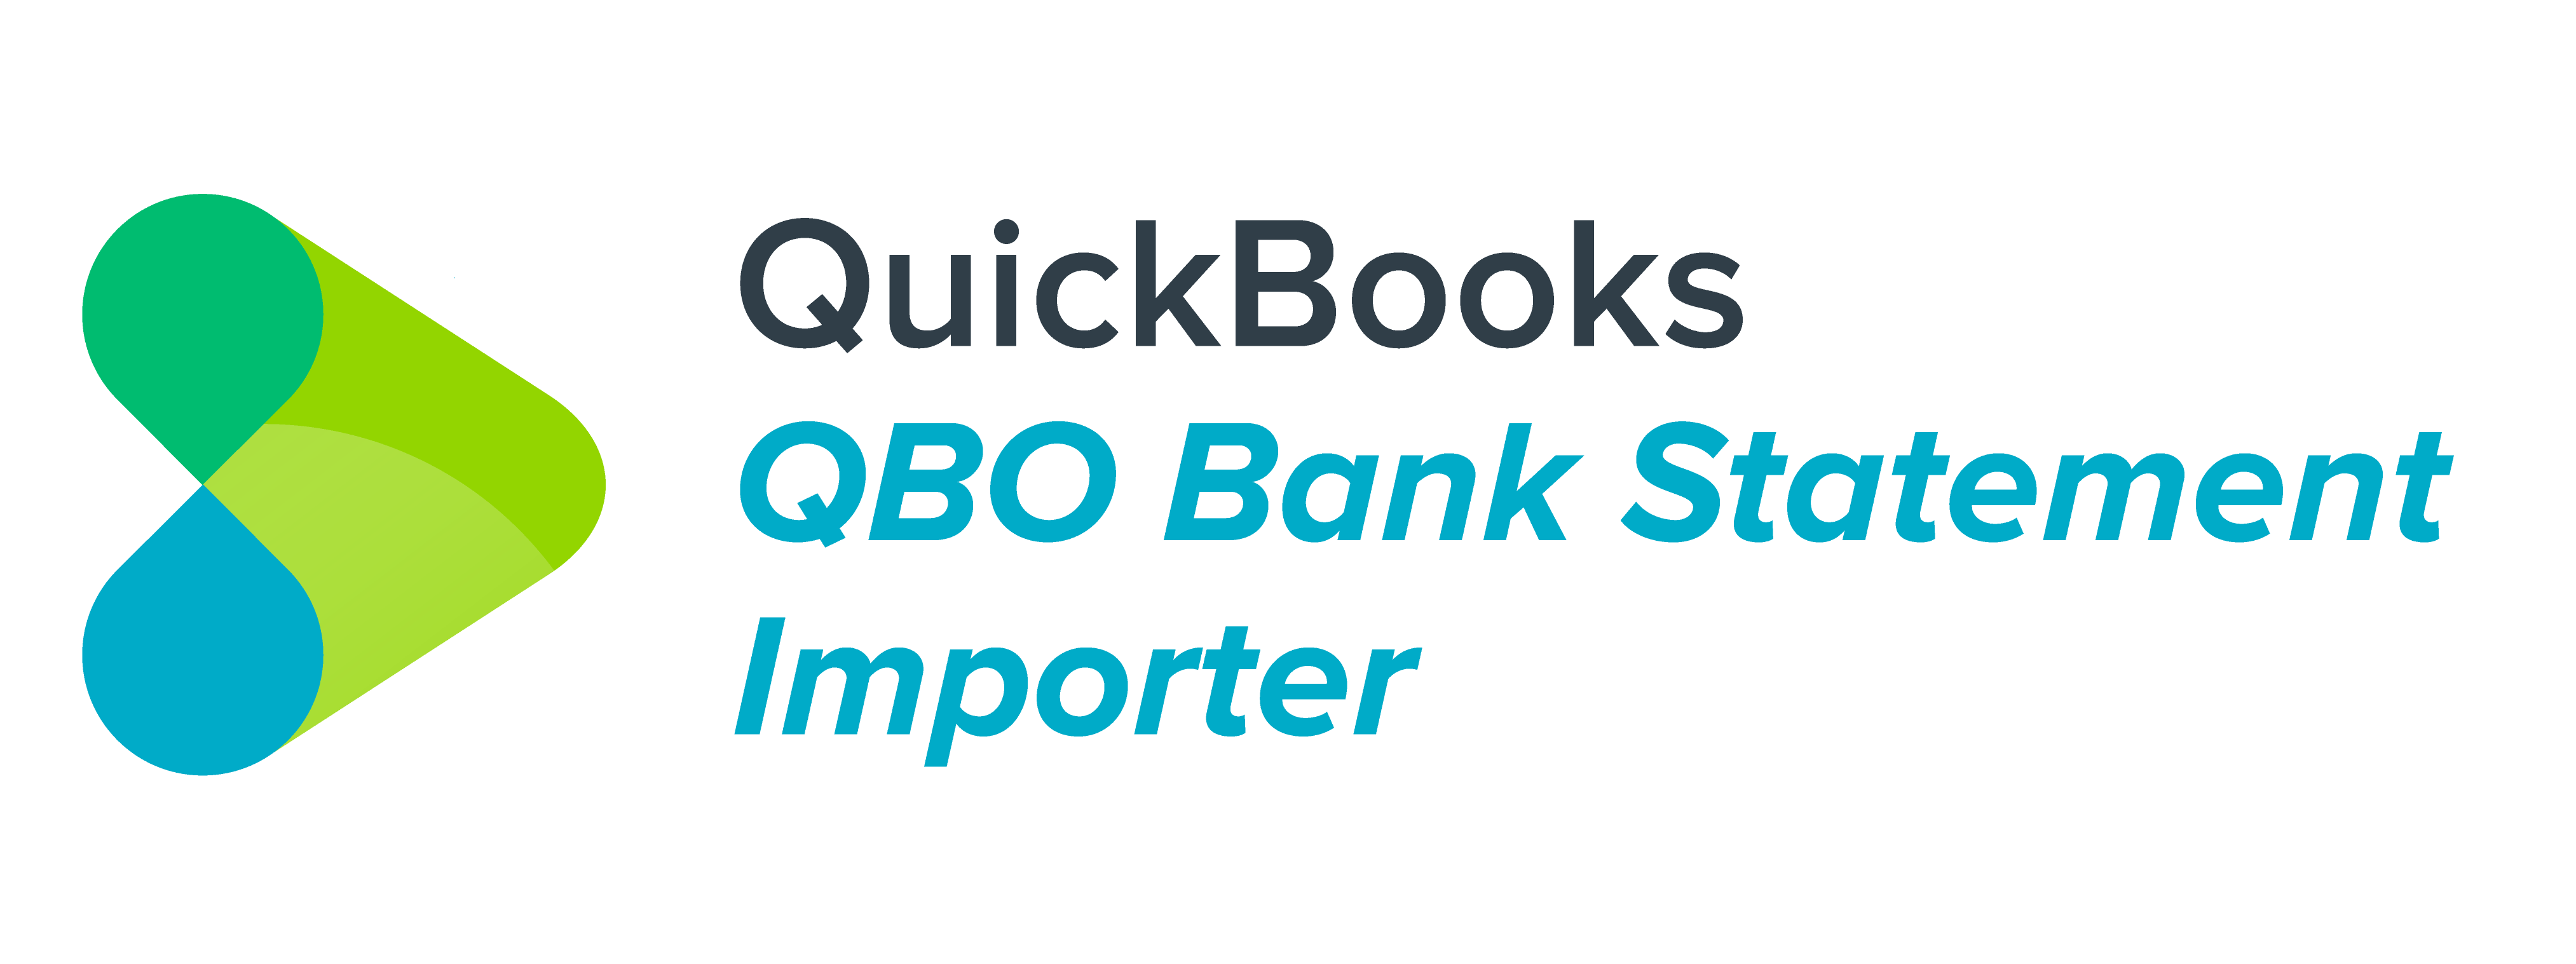 bank statement importer - quickbooks